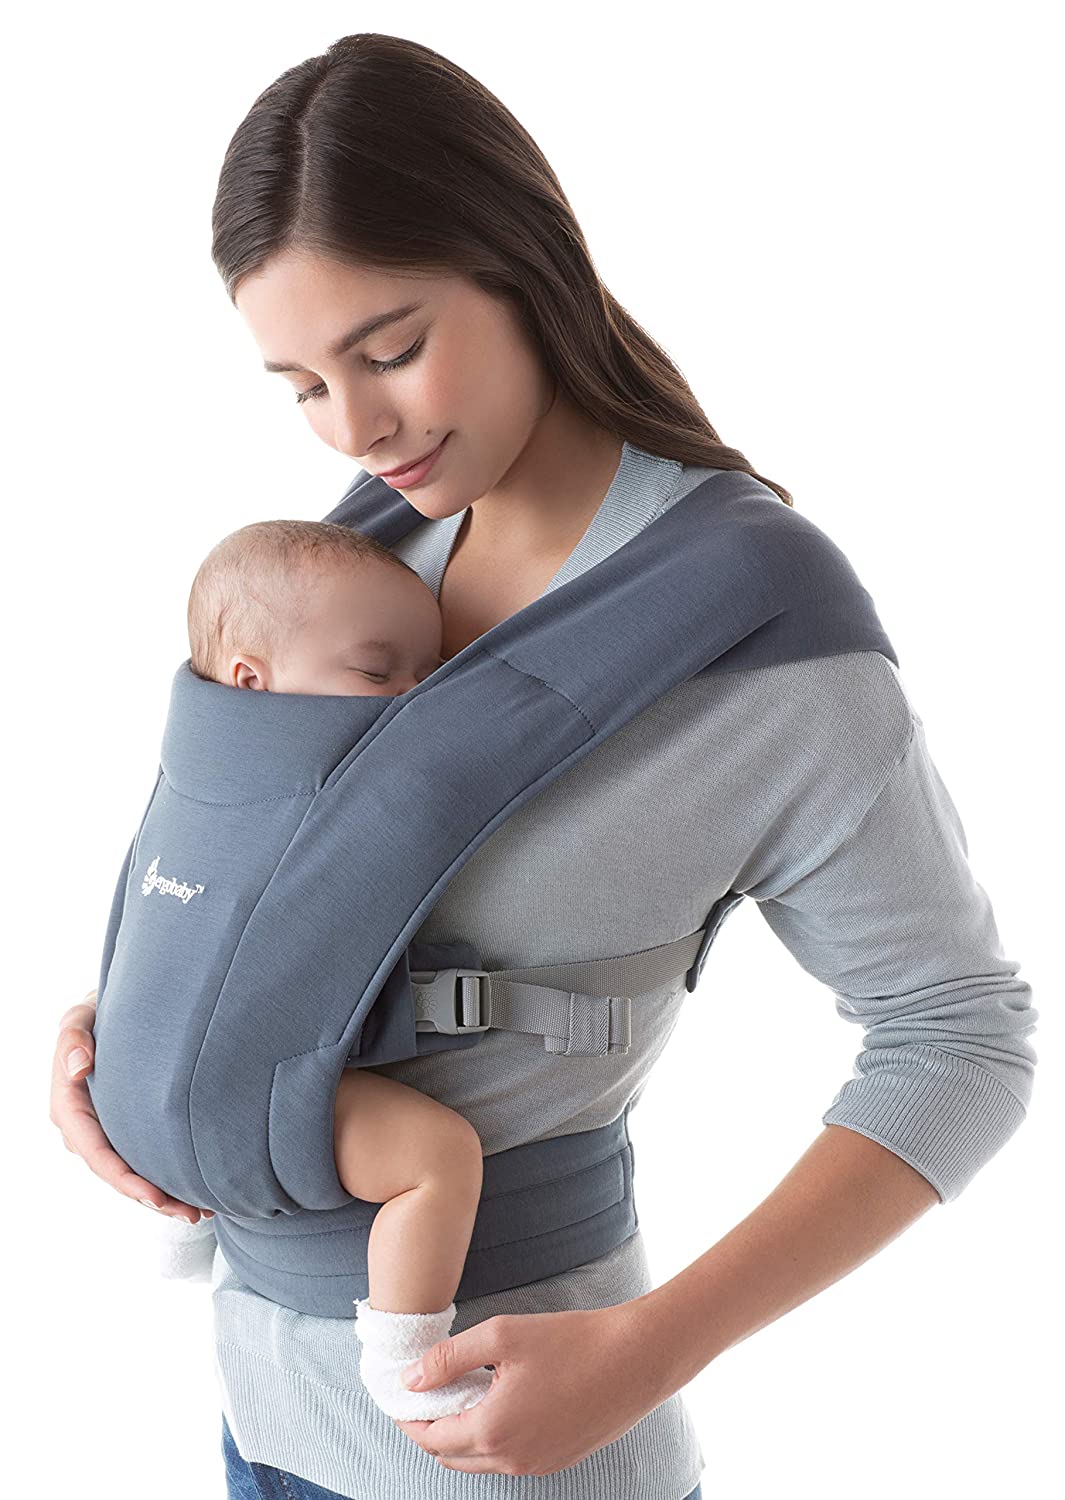 Ergobaby baby carrier for newborns from birth extra soft, Embrace front carrier baby carrier bag ergonomic (Oxford Blue)